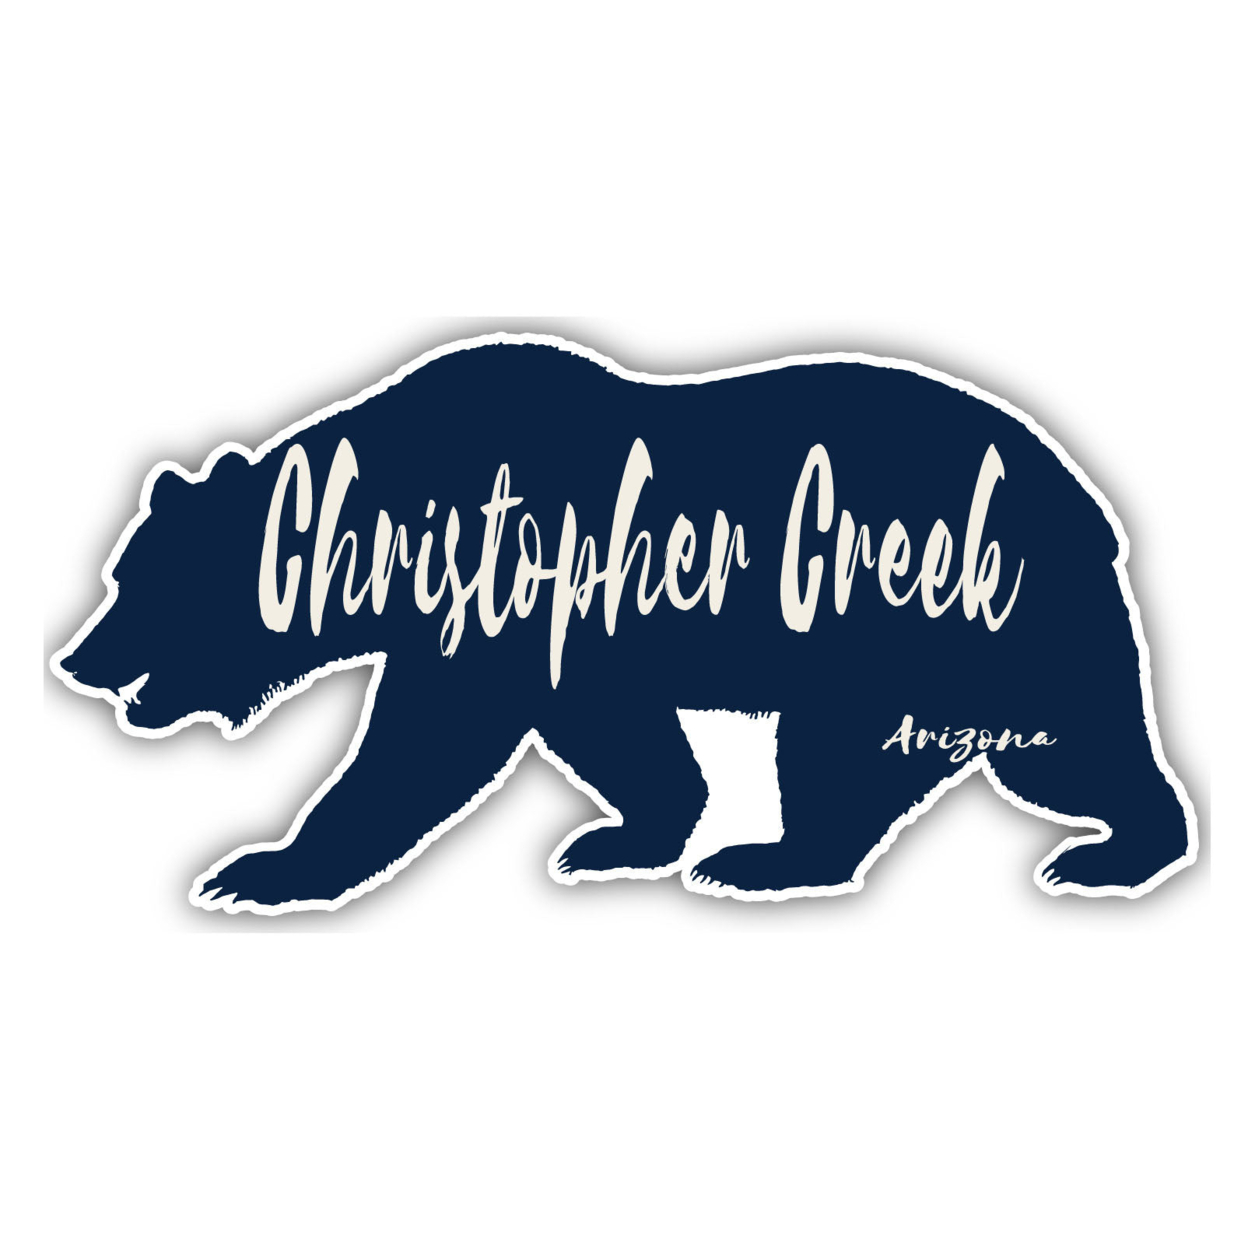 Christopher Creek Arizona Souvenir Decorative Stickers (Choose Theme And Size) - 4-Pack, 12-Inch, Tent